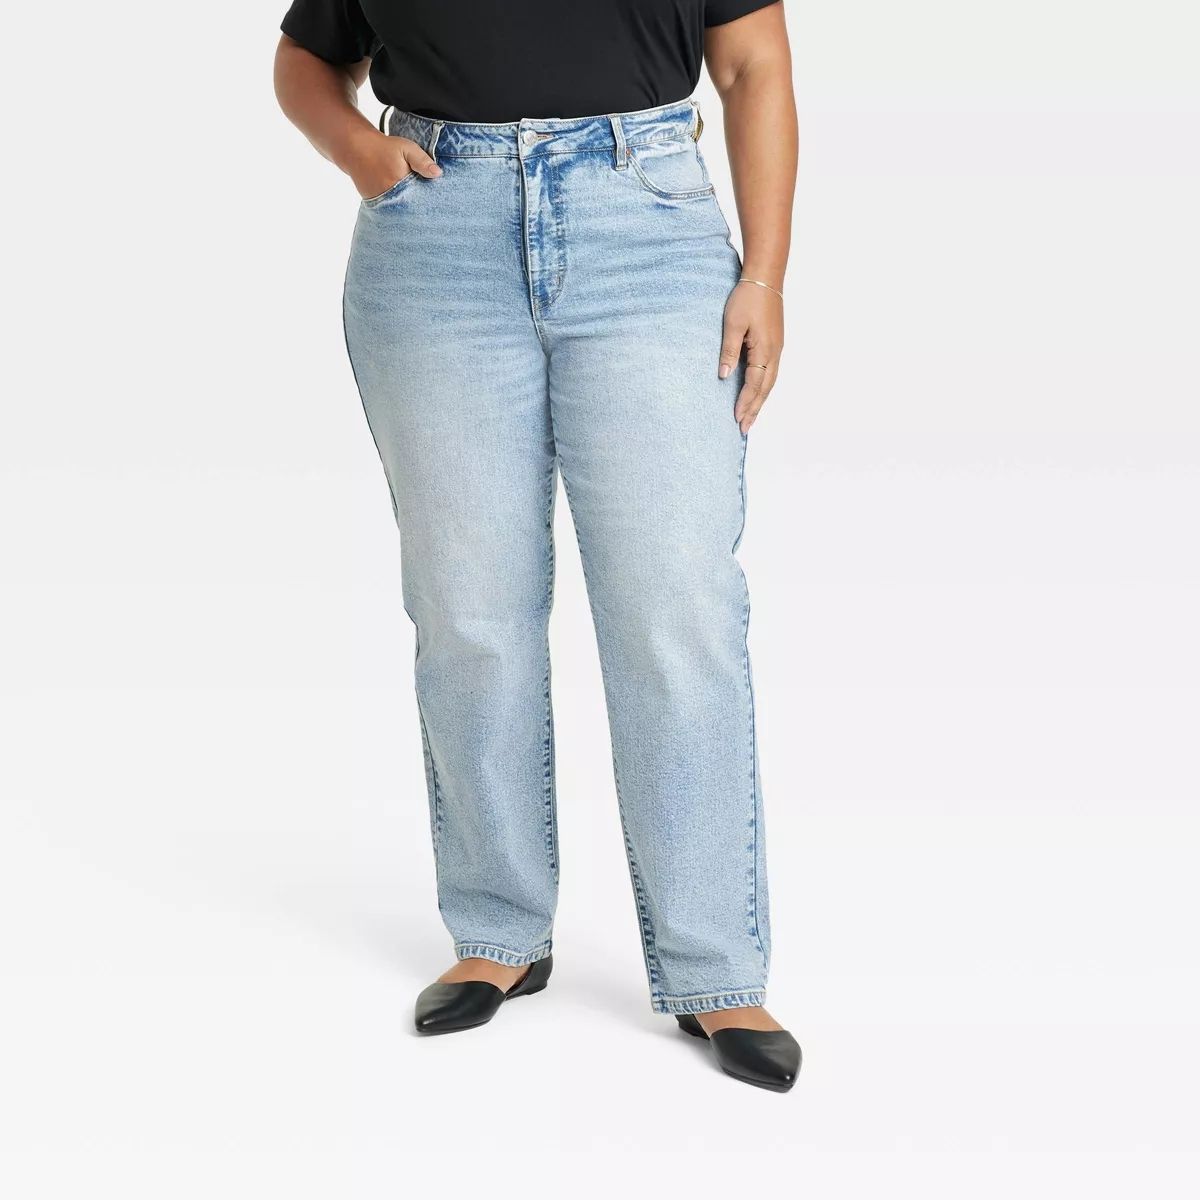 Blue high mom fit jeans | Loavies-pokeht.vn